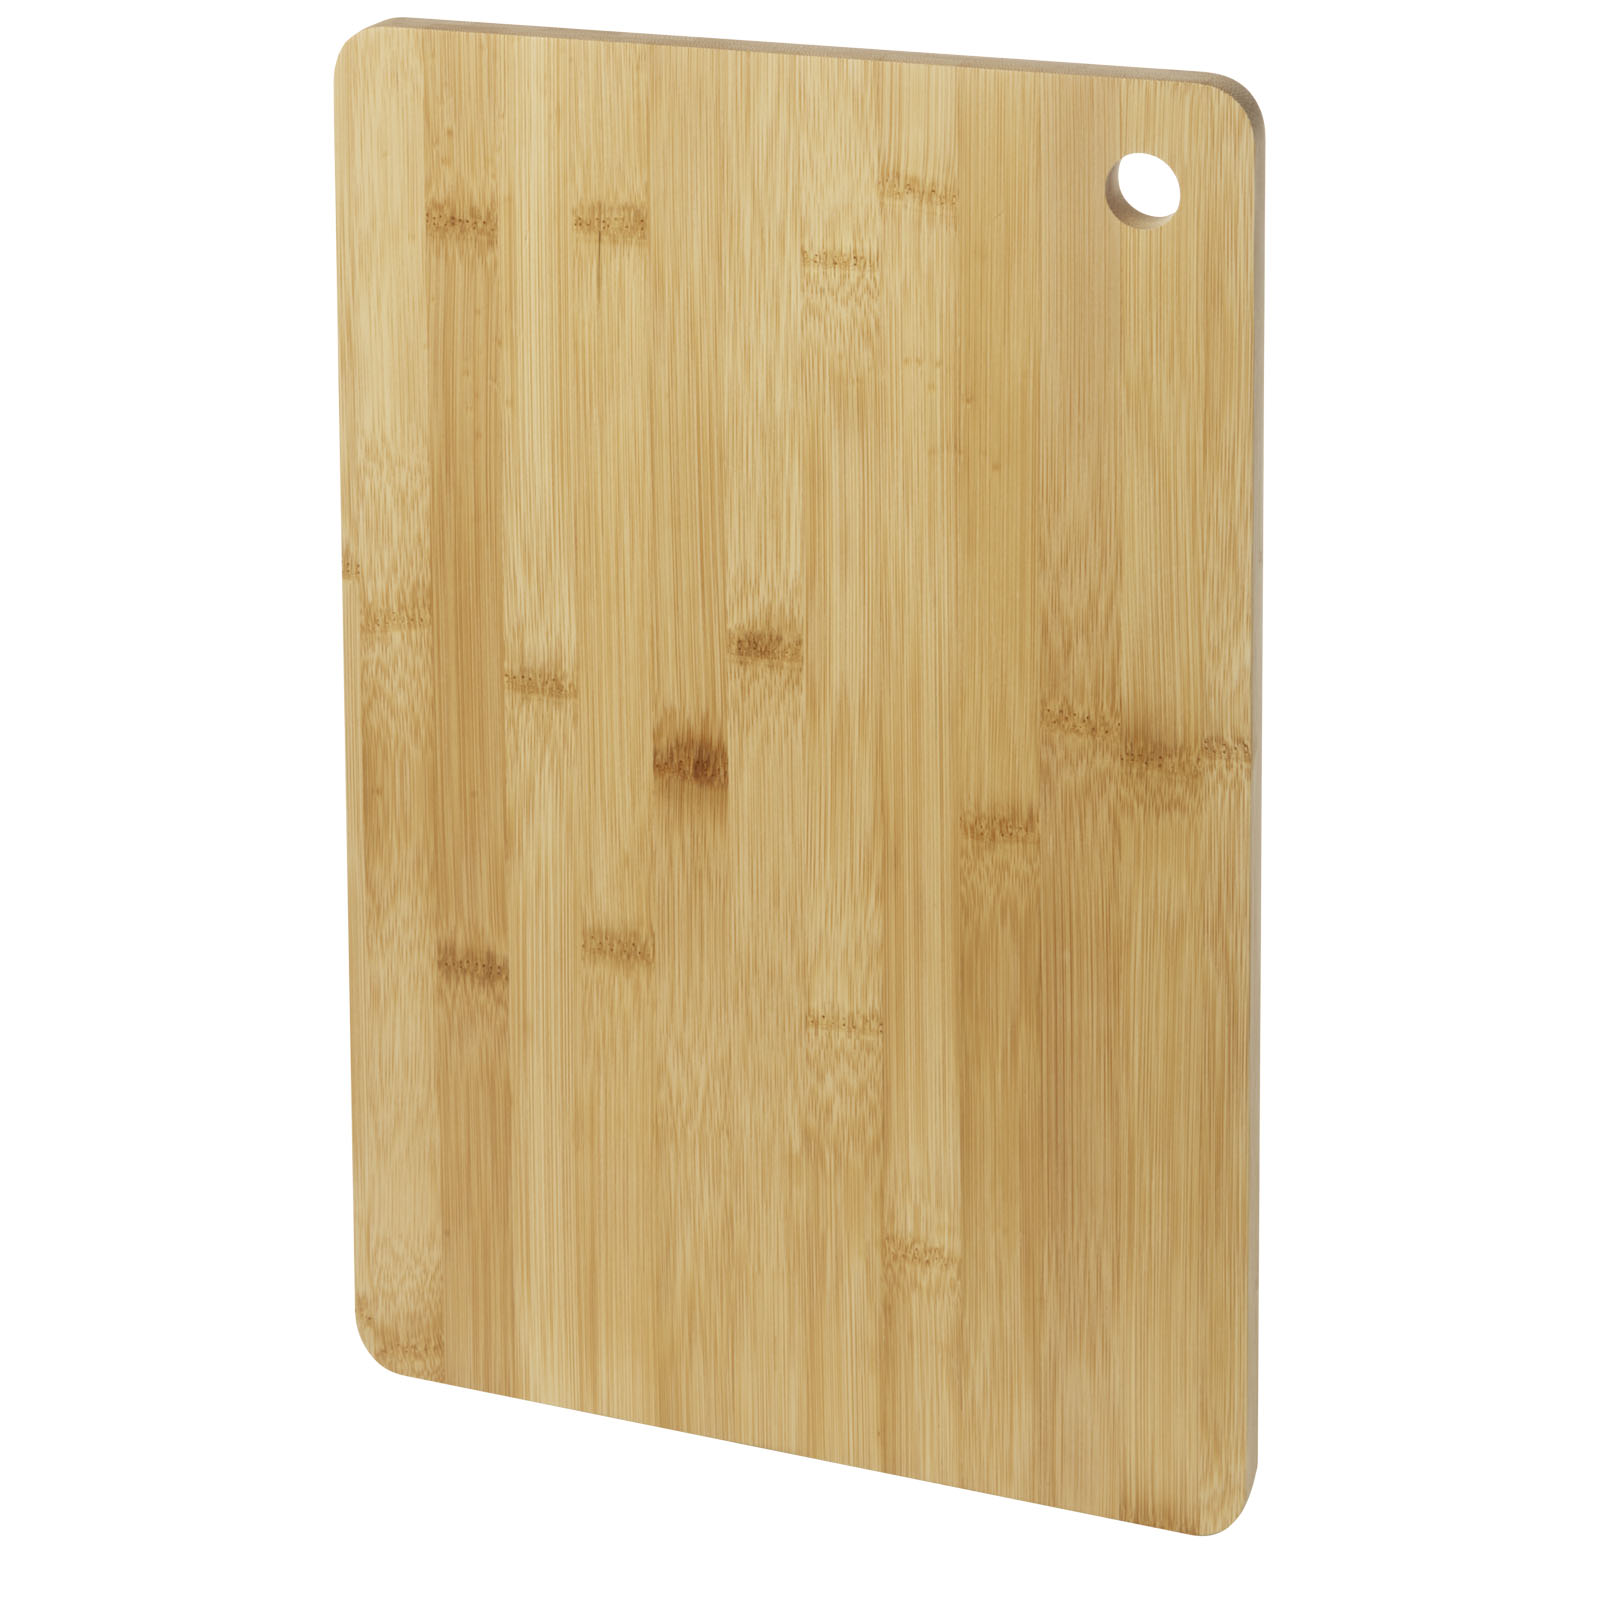 Advertising Cutting Boards - Harp bamboo cutting board - 5